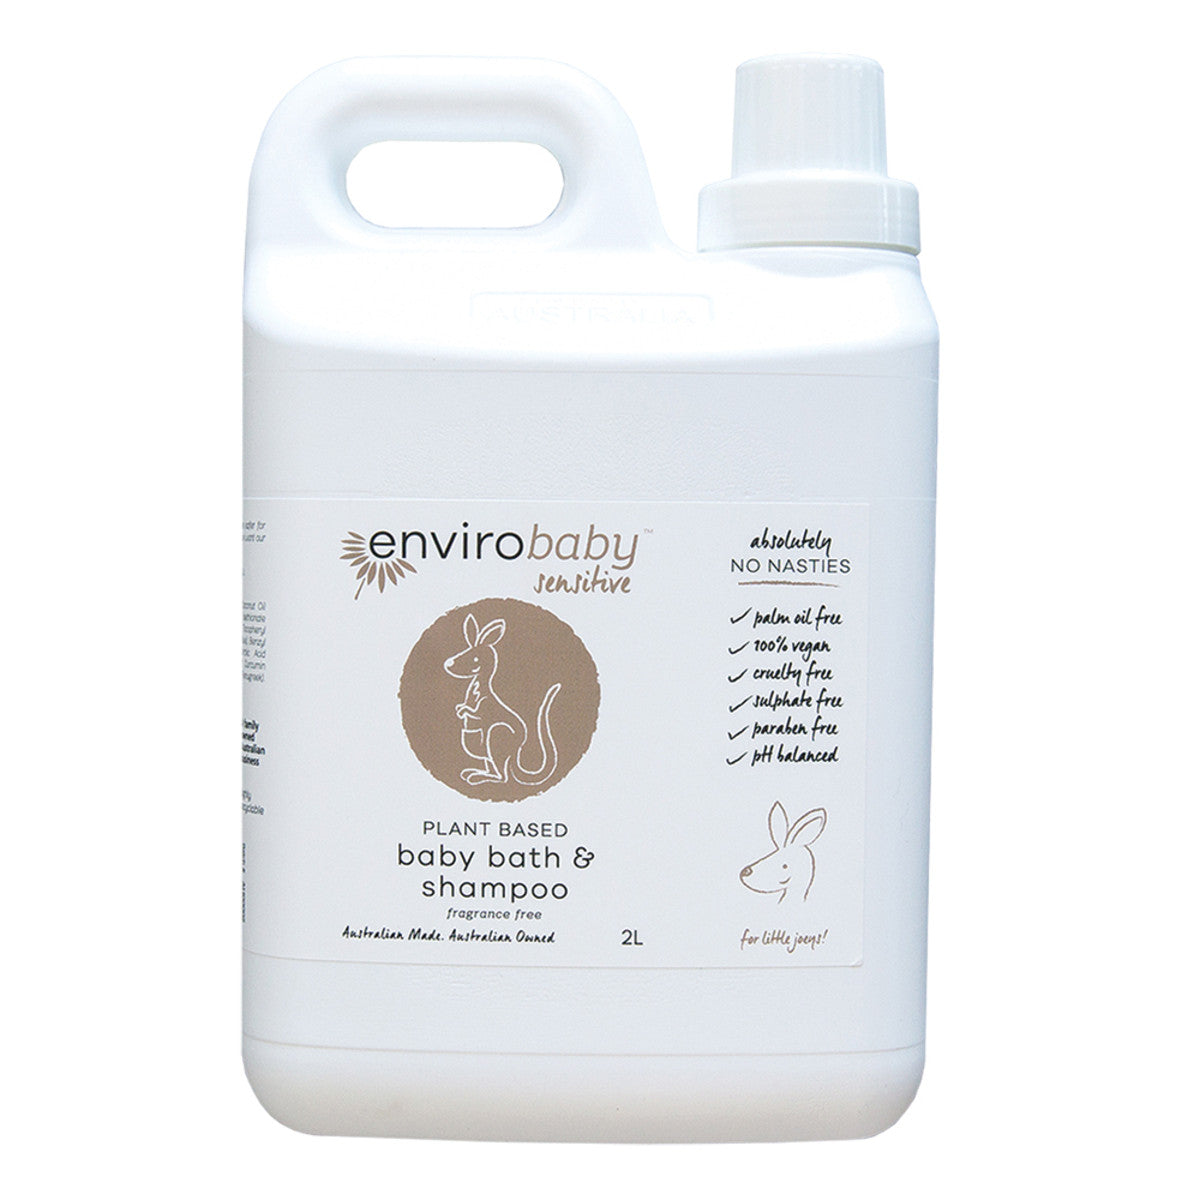 EnviroBaby - Sensitive Baby Bath Shampoo Fragrance Free 2L